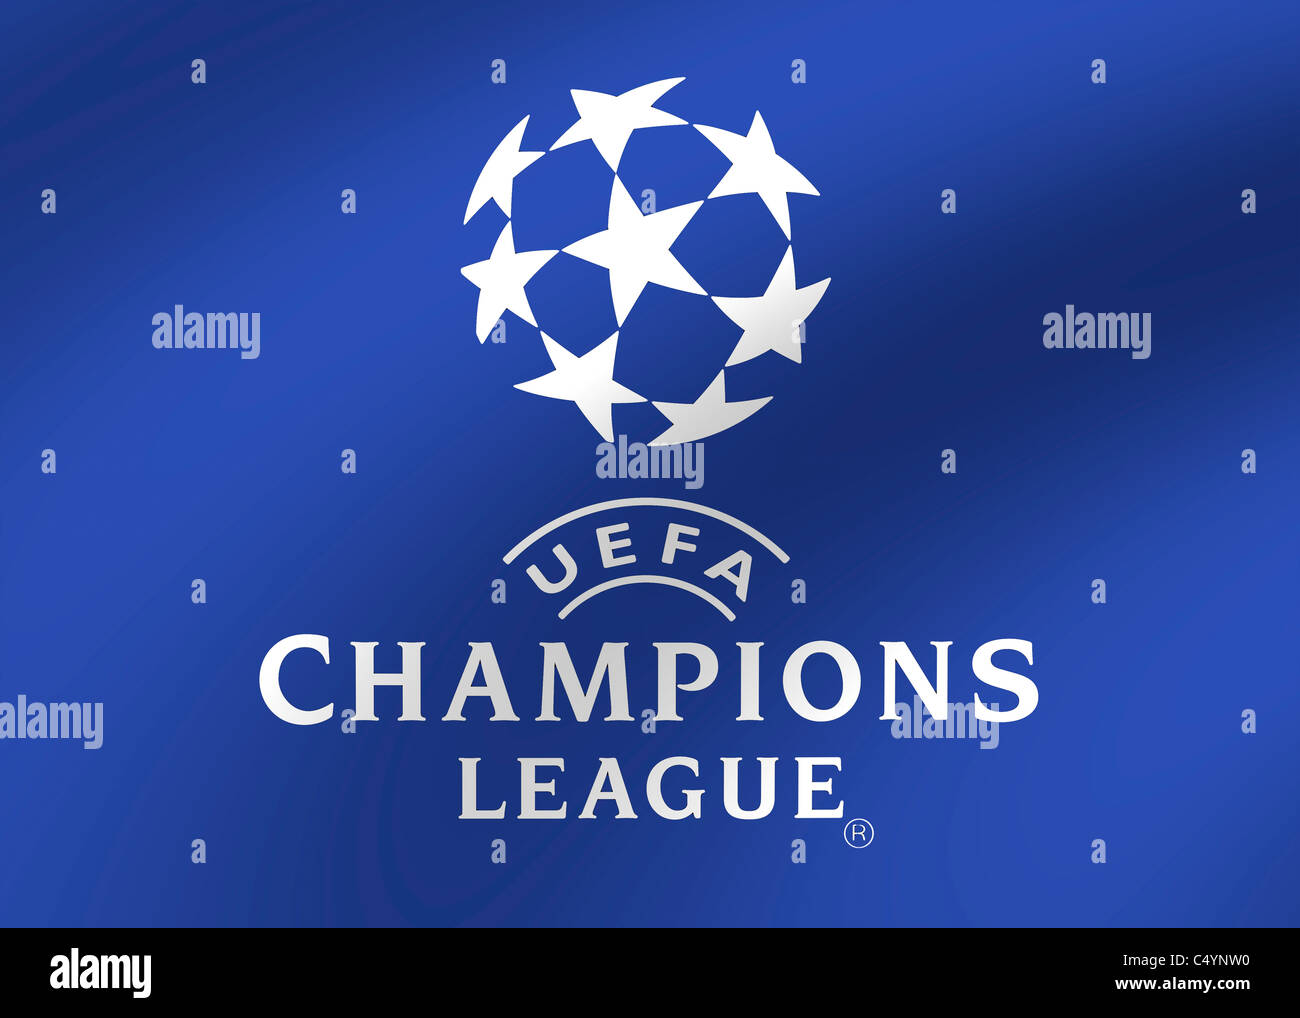 Champions League UEFA logo flag symbol icon Stock Photo